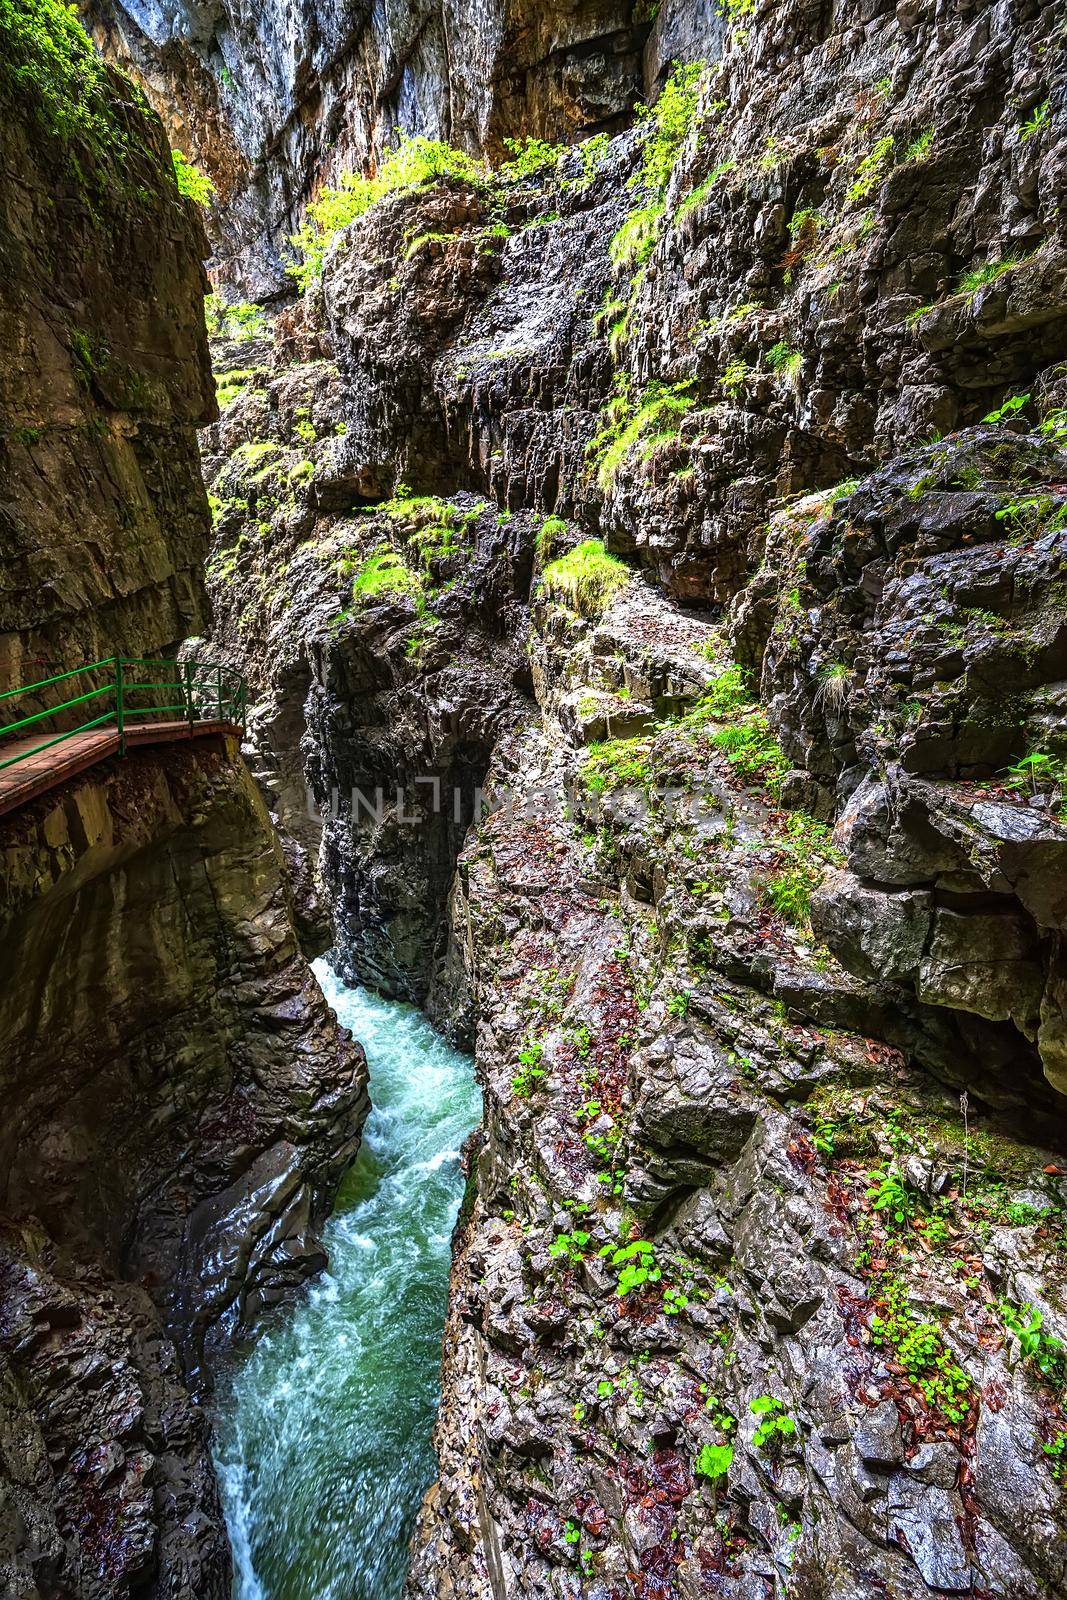 Walking Through a narrow gorge at Breitachklamm, Germany